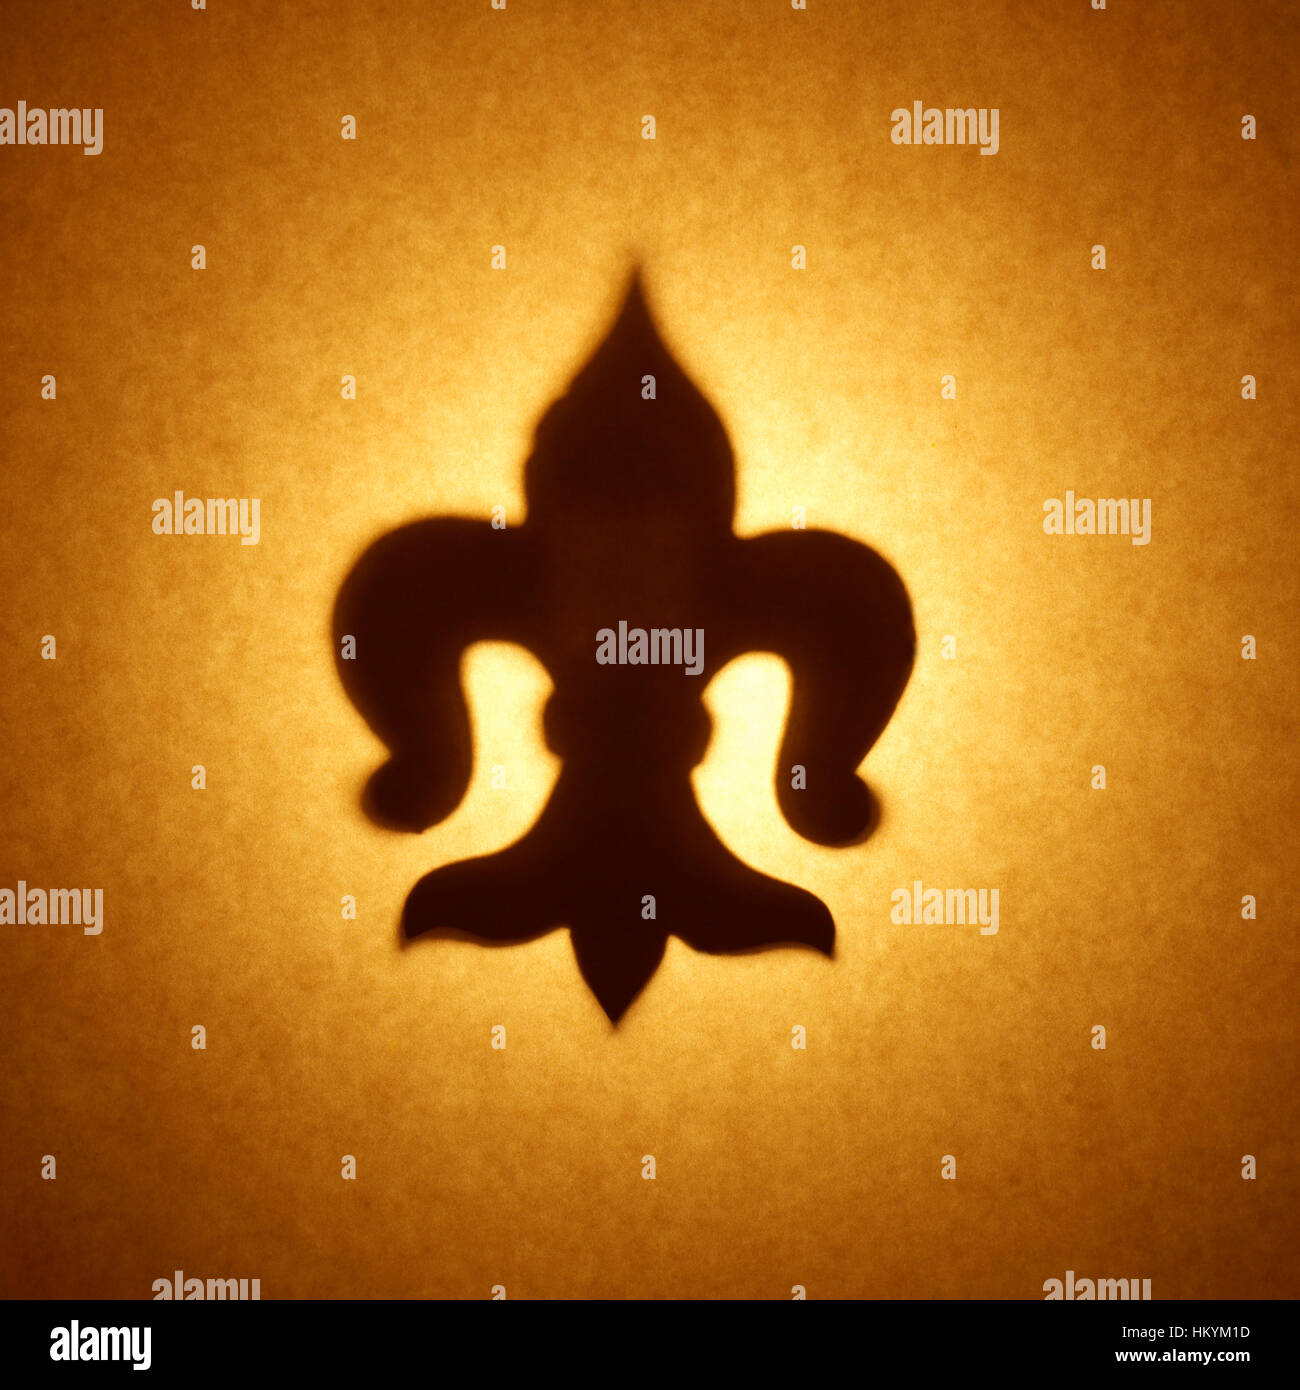 Backlit silhouette of fleur-de-lis shape cut out against brown tone paper, with spot highlight. Stock Photo